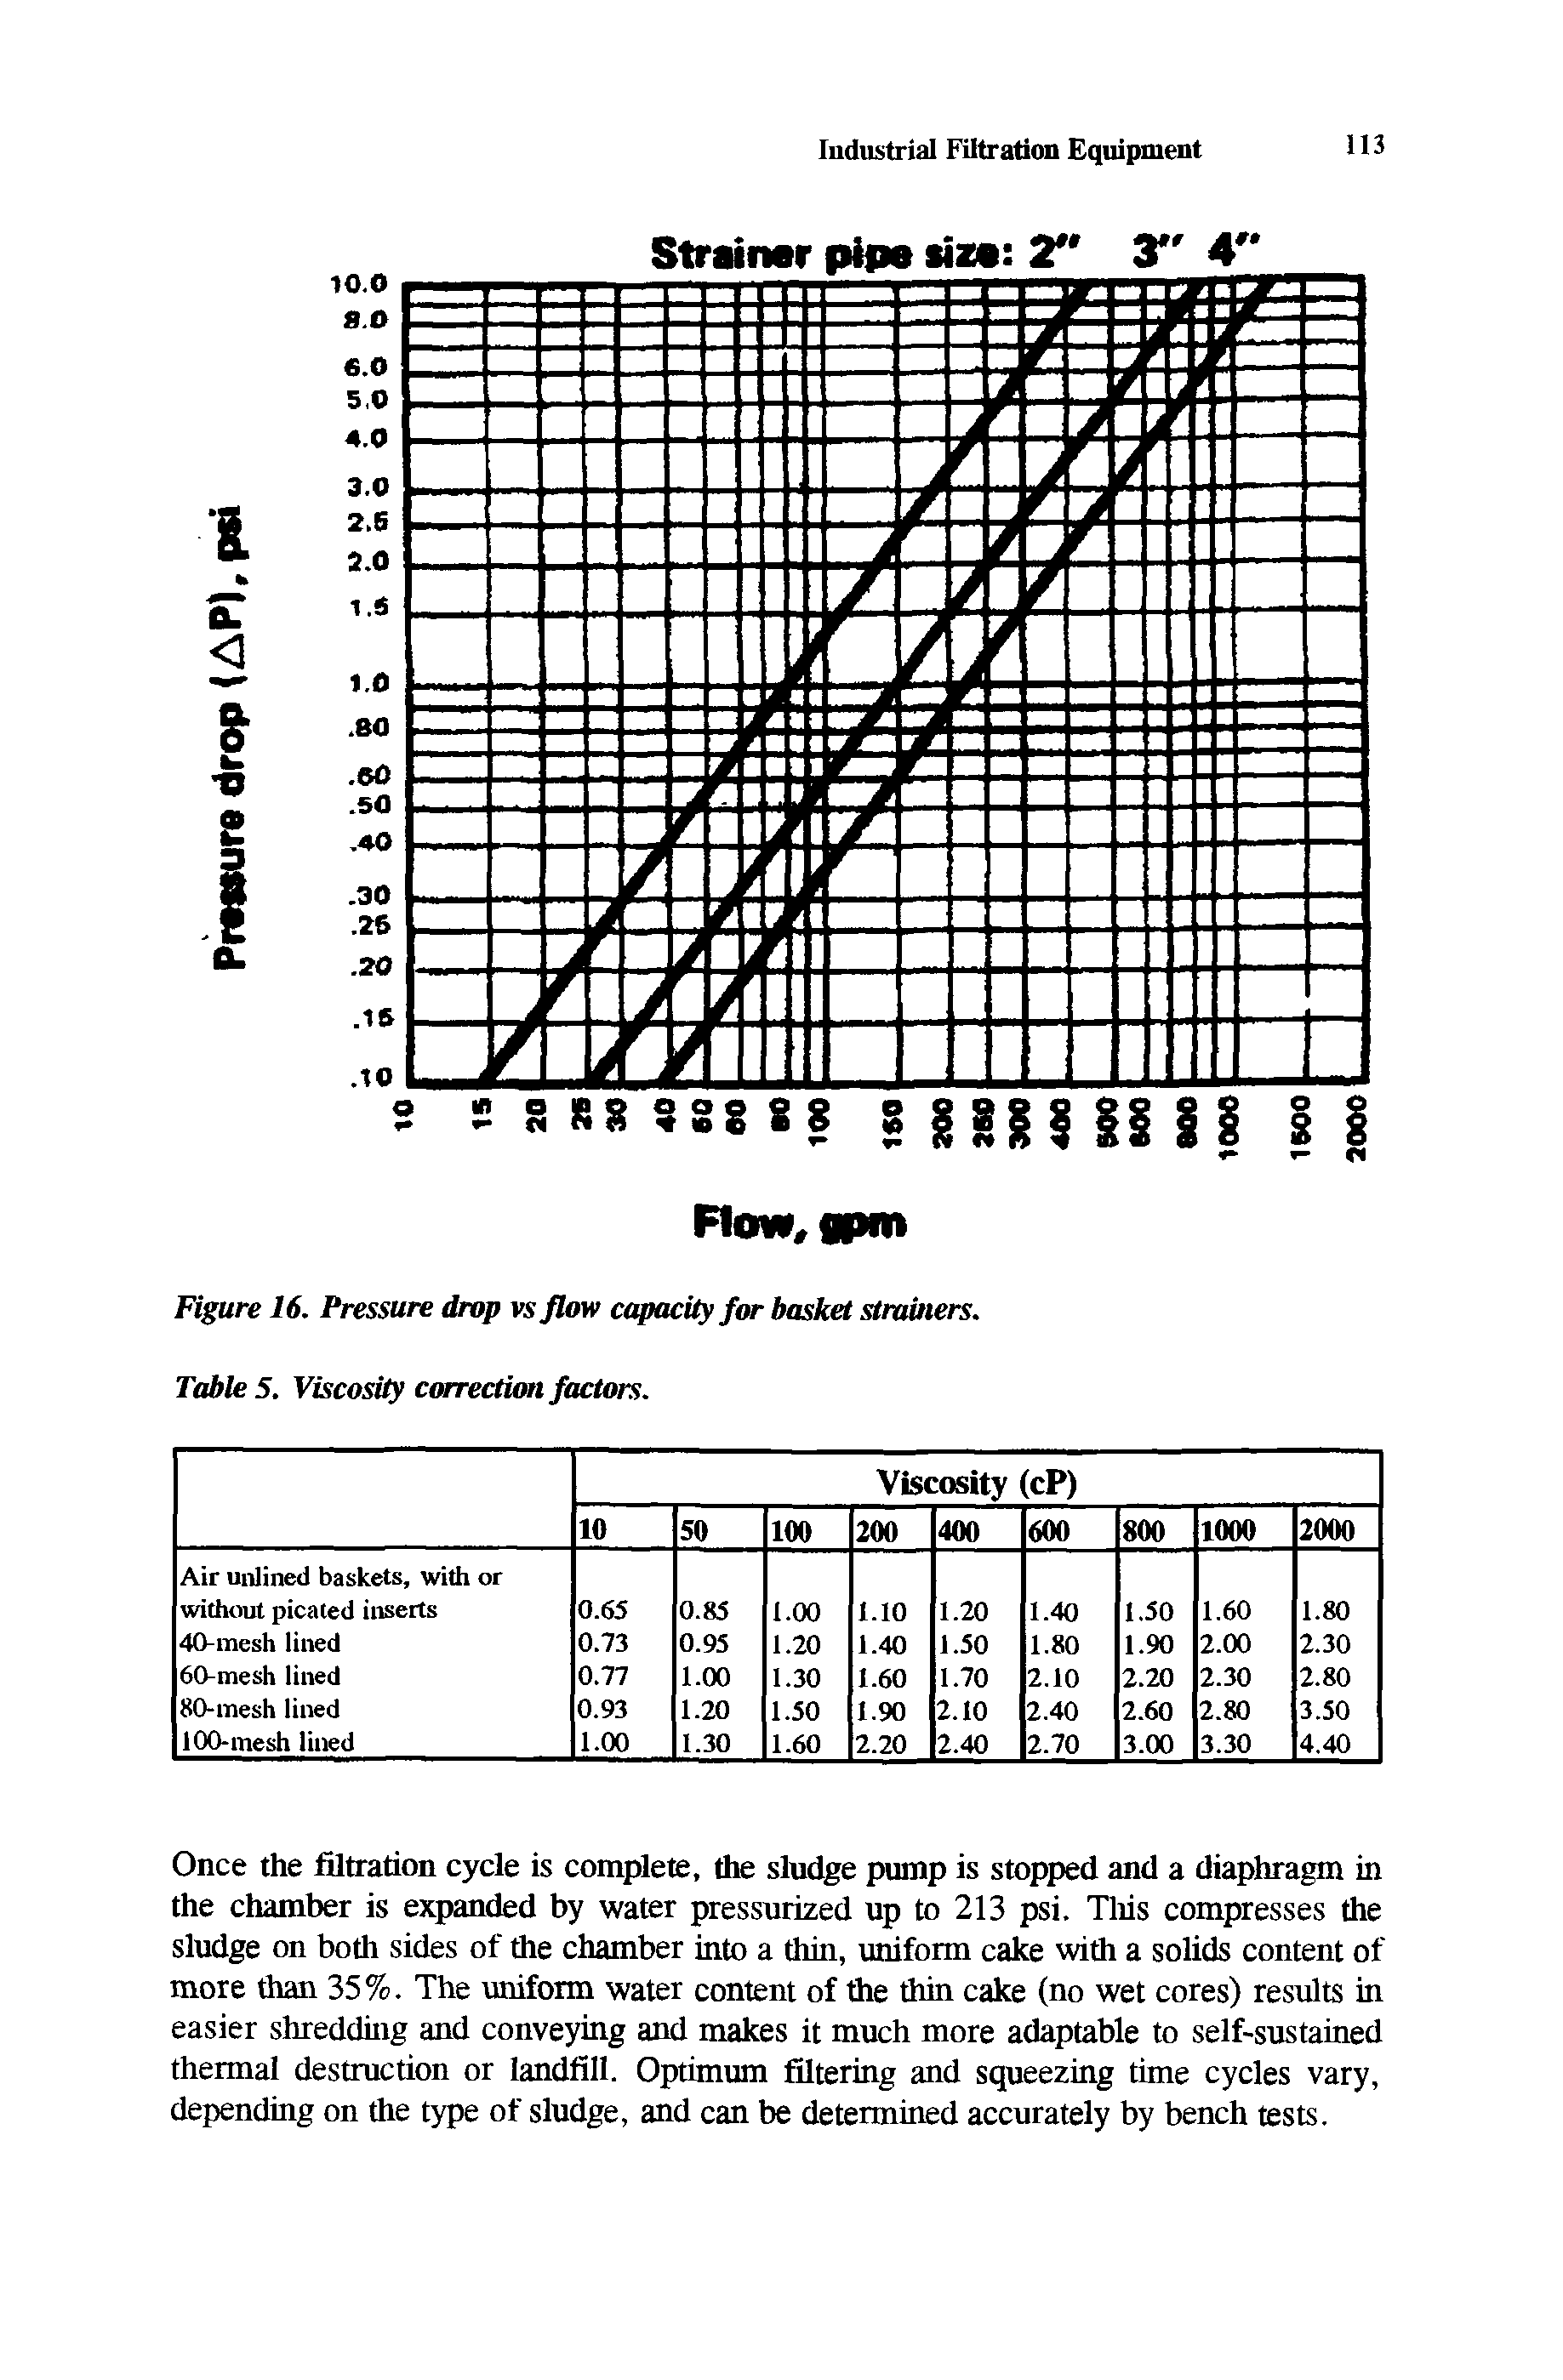 Figure 16. Pressure drop vs flow capacity far basket strainers. Table 5. Viscosity correction factors.